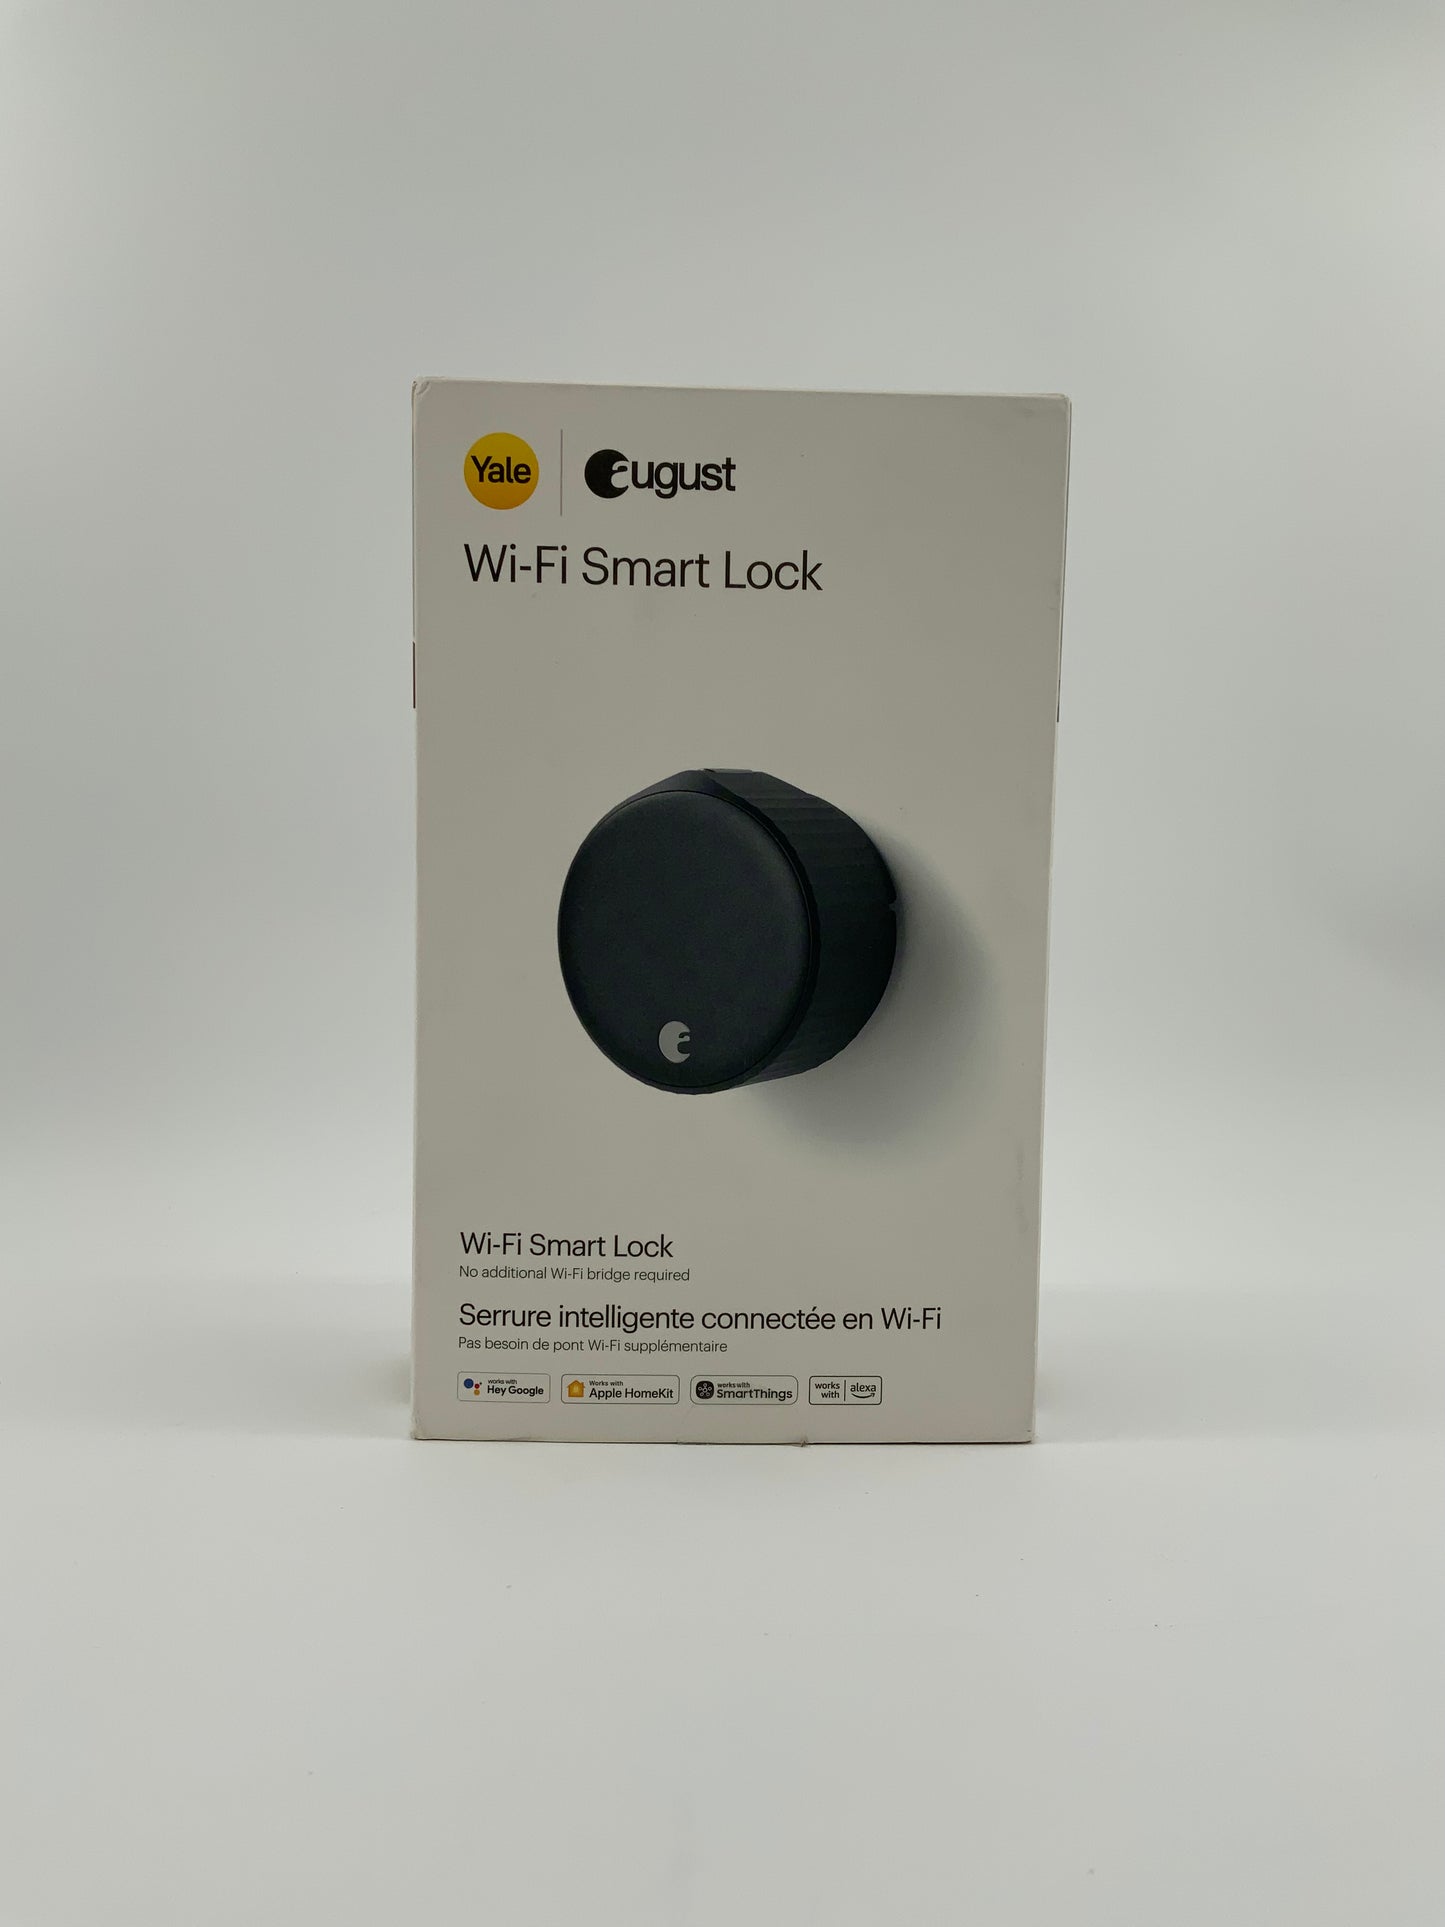 Wi-Fi Smart Lock